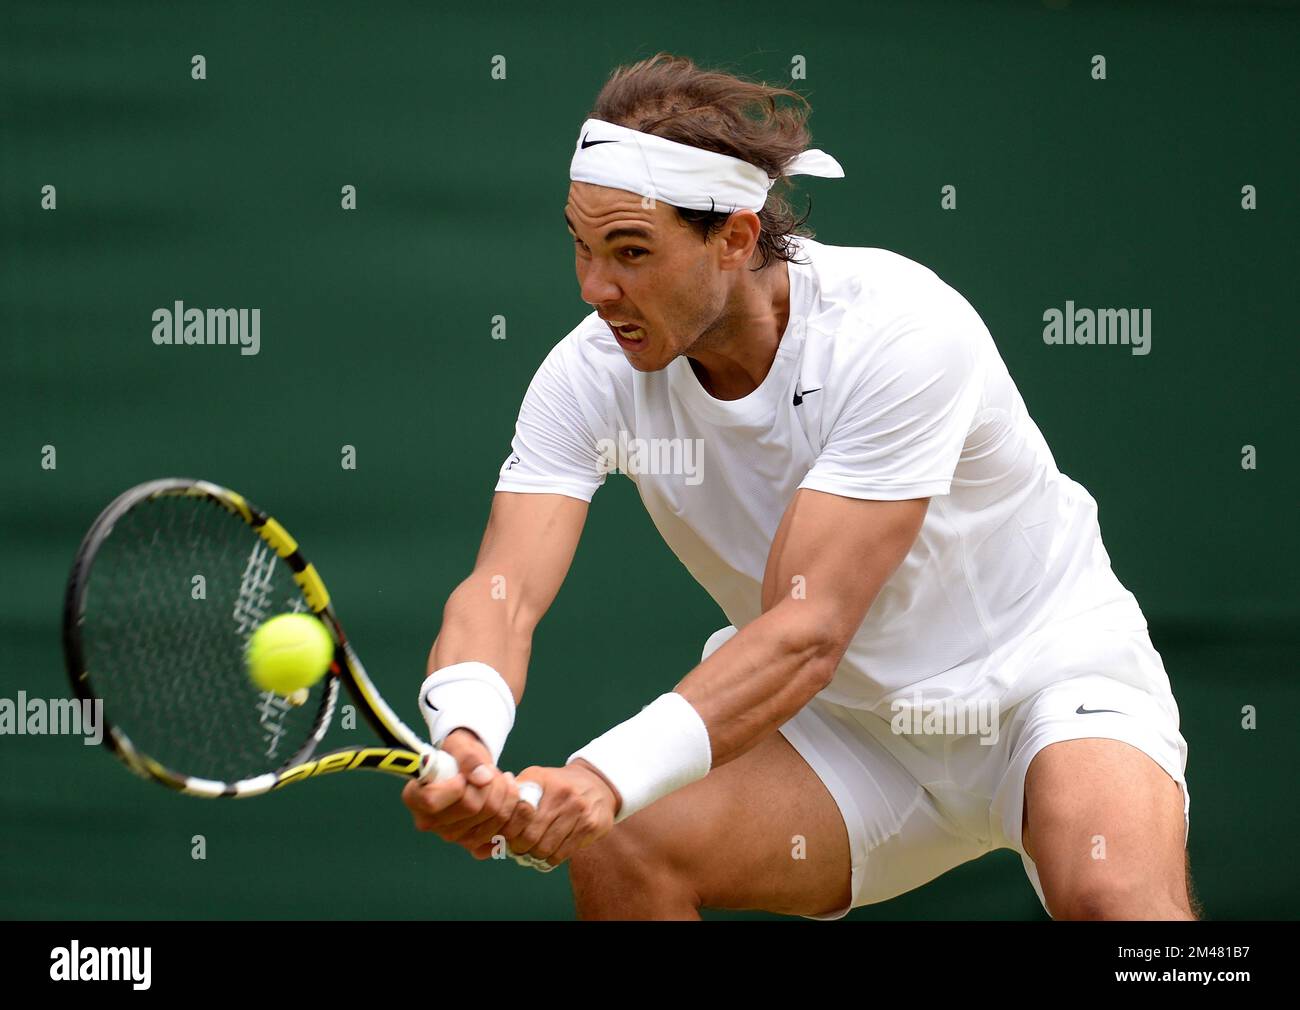 Rafael Nadal, Wimbledon Tennis Championships 2014, Wimbledon London. Seconda tornata Mens Singles, Centre Court, Lukas Rosol (CZE) contro Rafael Nadal (ESP). Foto Stock